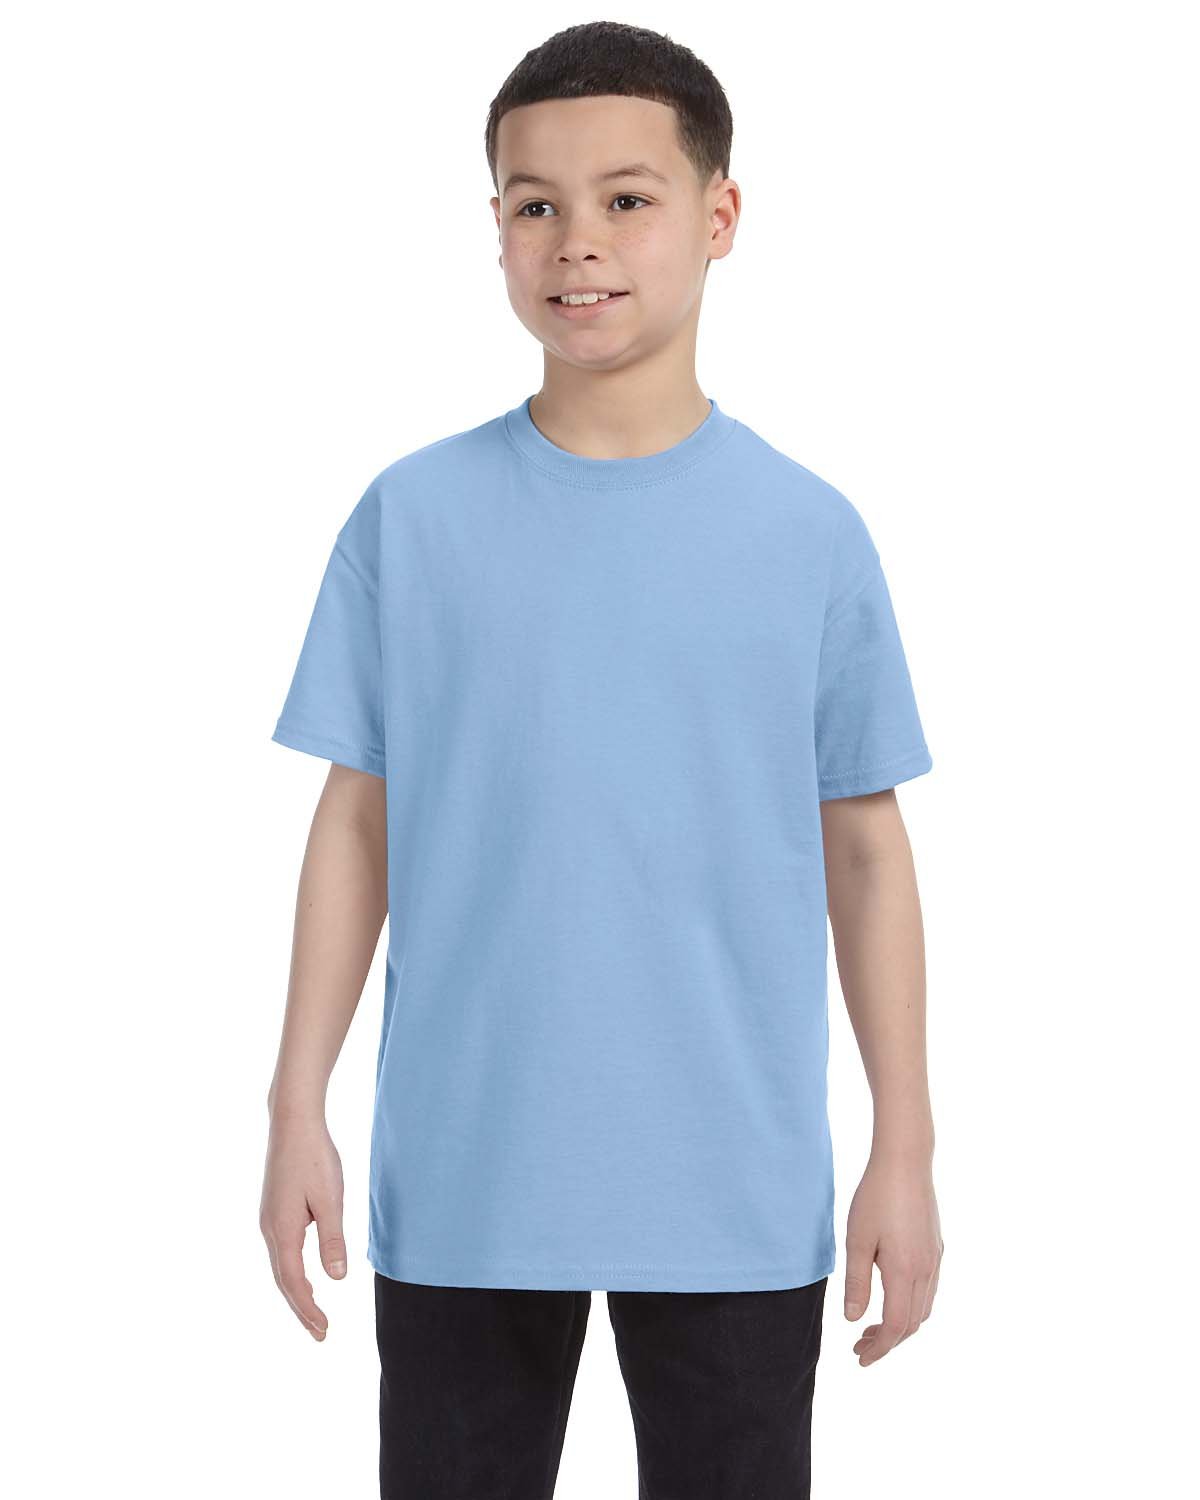 Cotton™ Heavy T-Shirt Youth alphabroder | Gildan